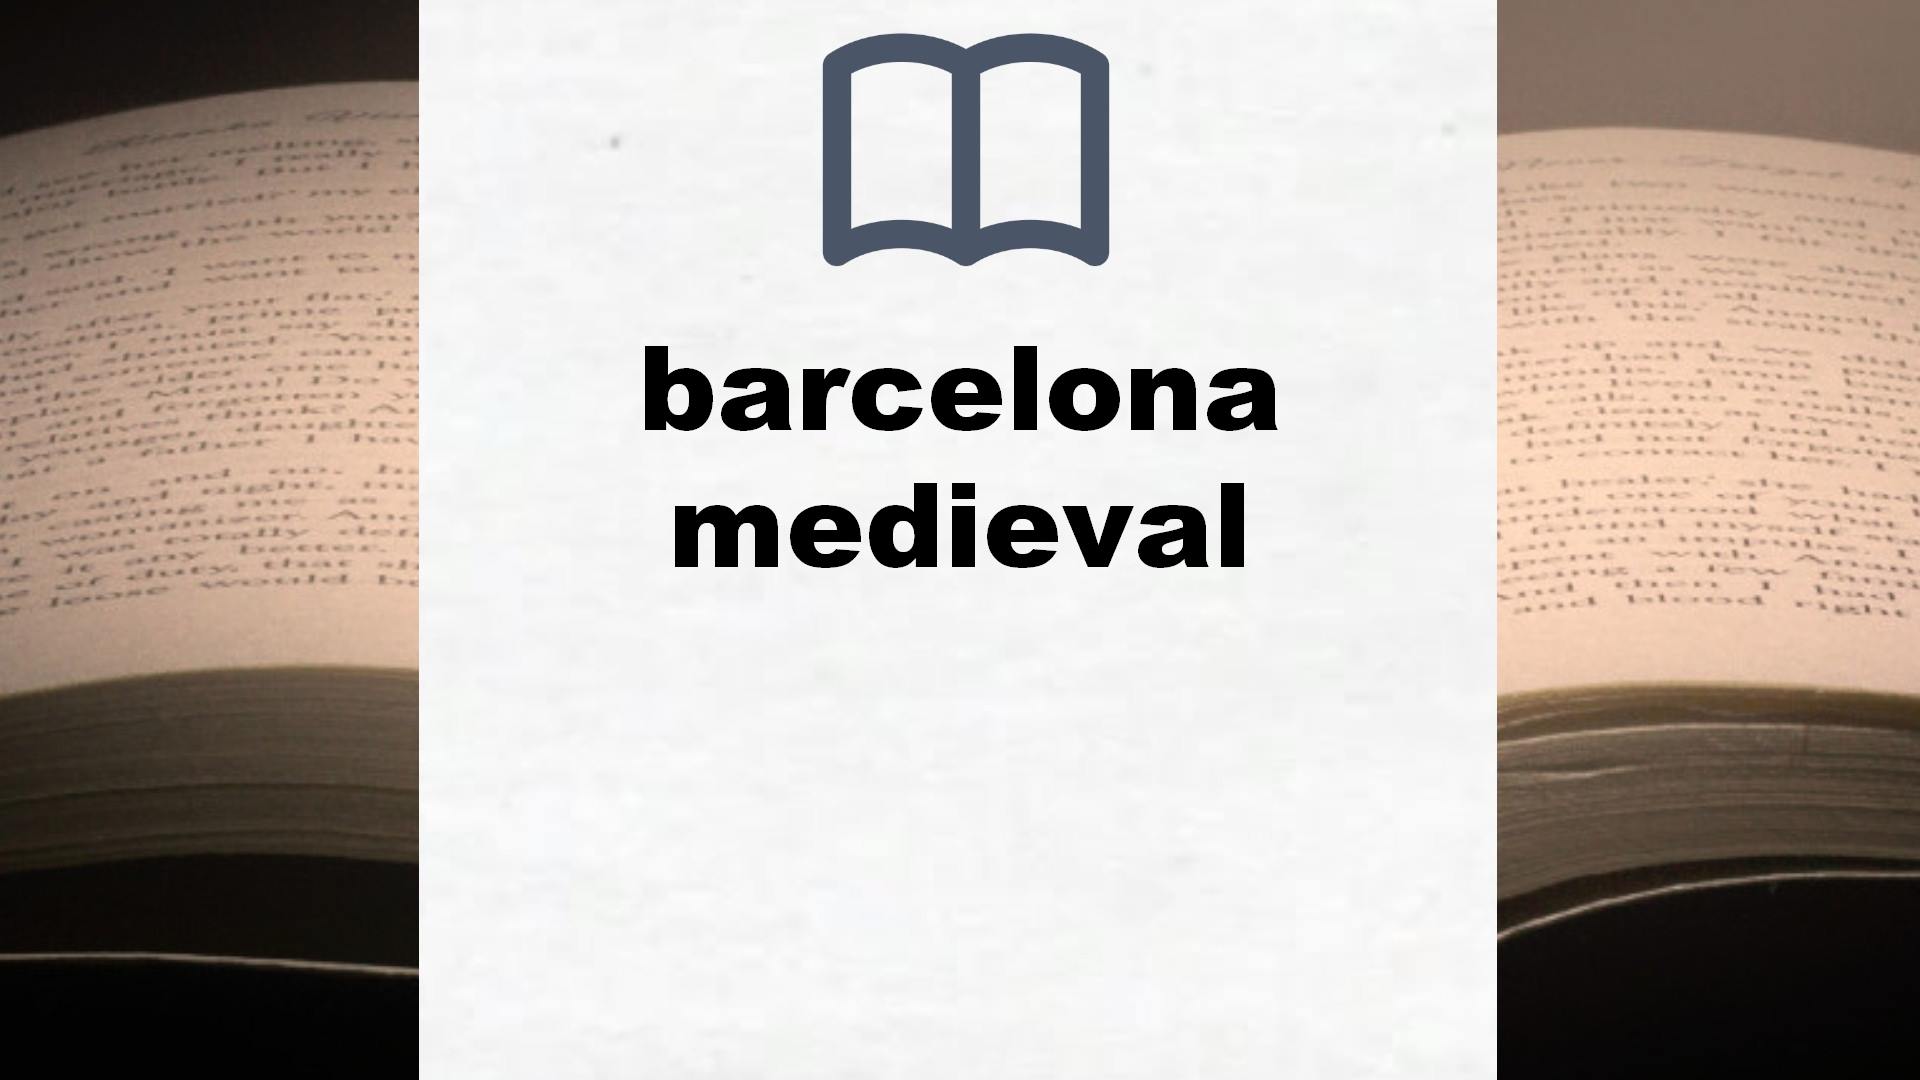 Libros sobre barcelona medieval